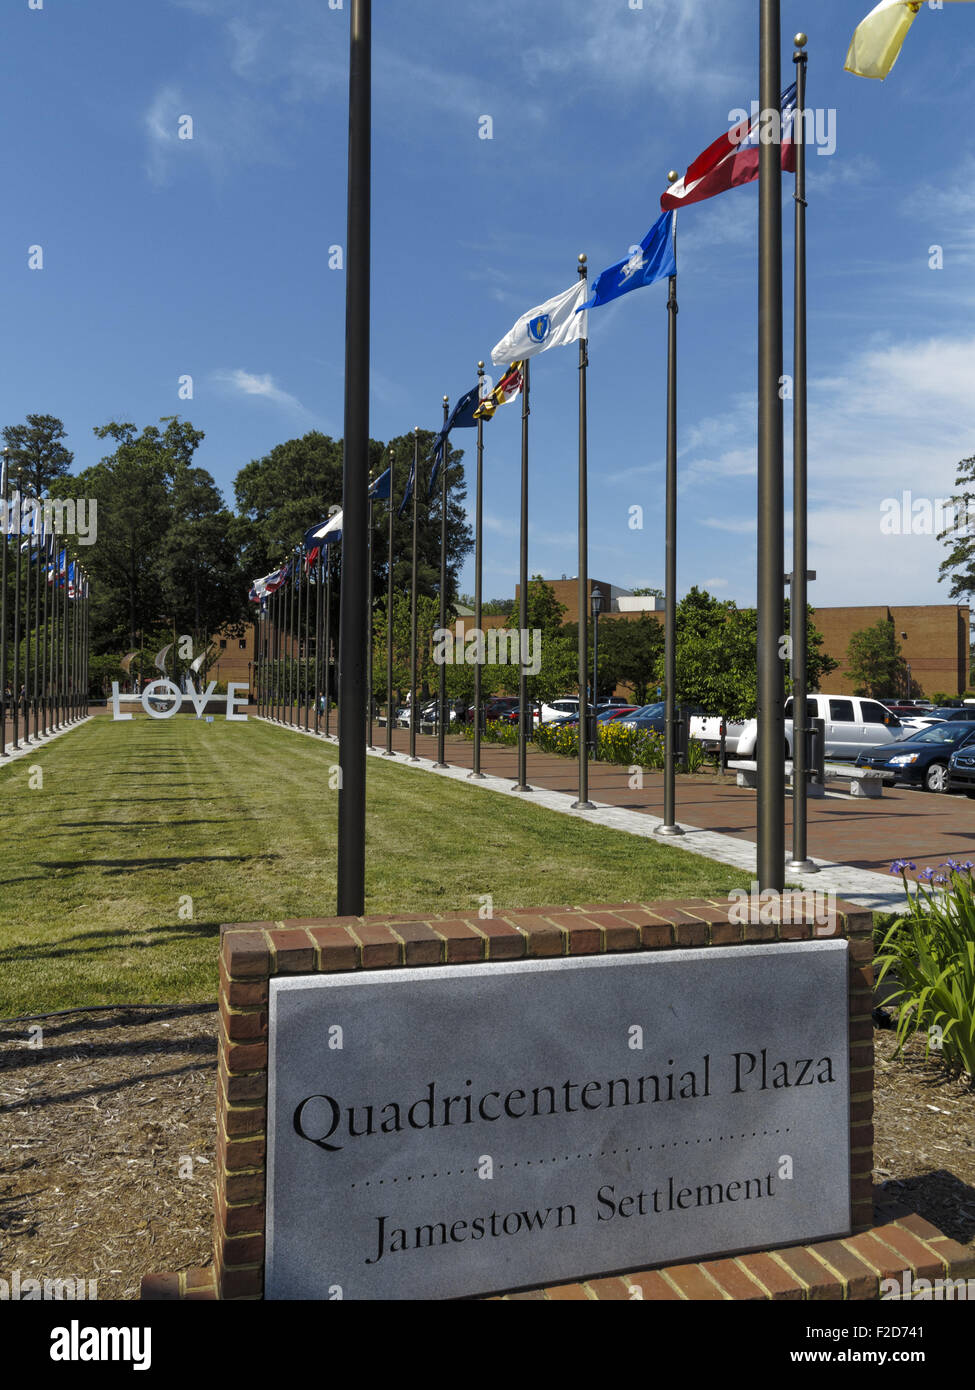 Quadricentennial Plaza Jamestown Settlement state flags and LOVE sign Williamsburg USA Stock Photo